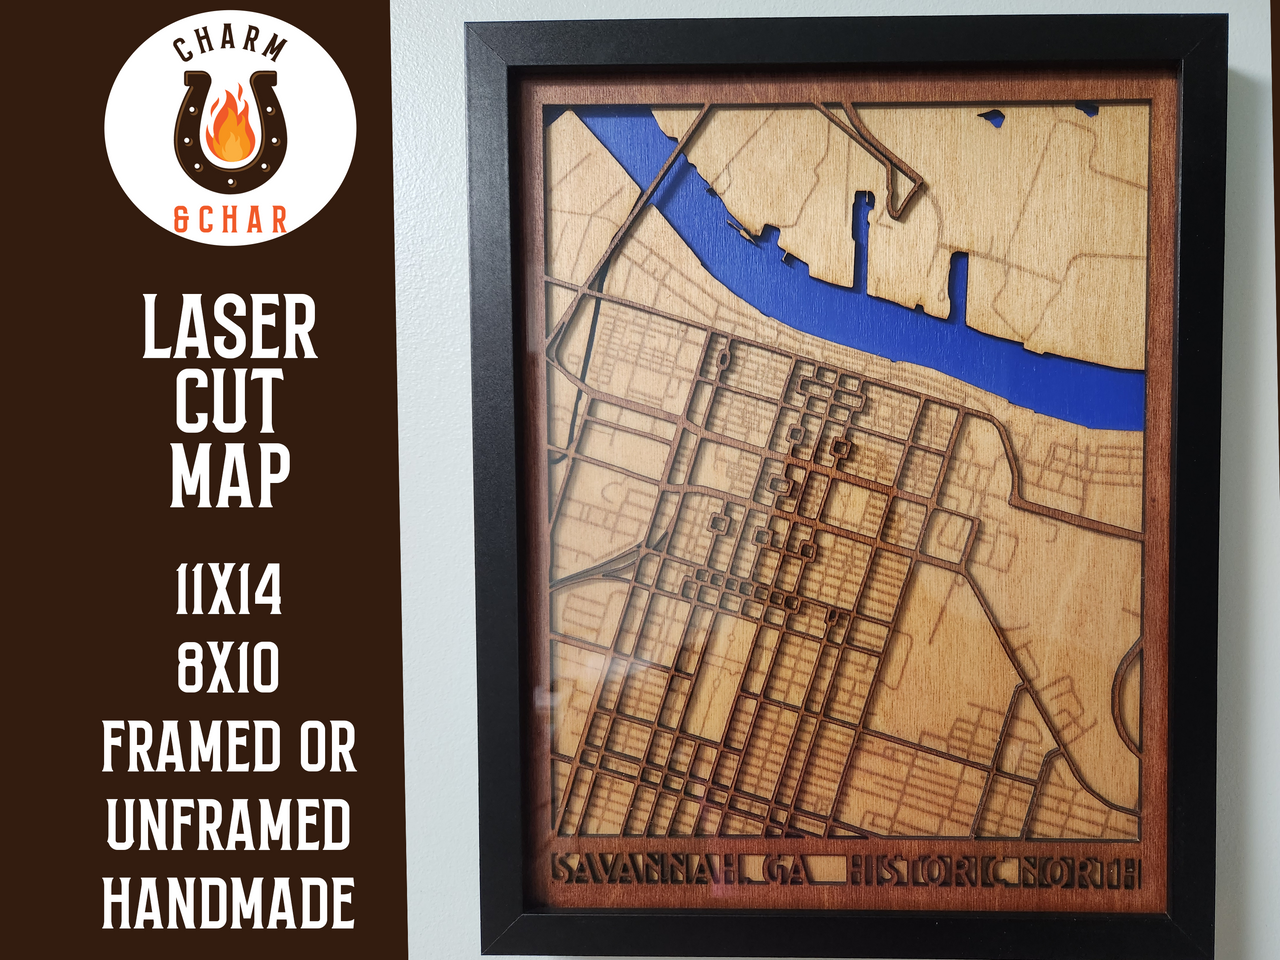 Savannah, GA Historic District North Wood Laser Map - Handcrafted Wood Map - Housewarming Gift